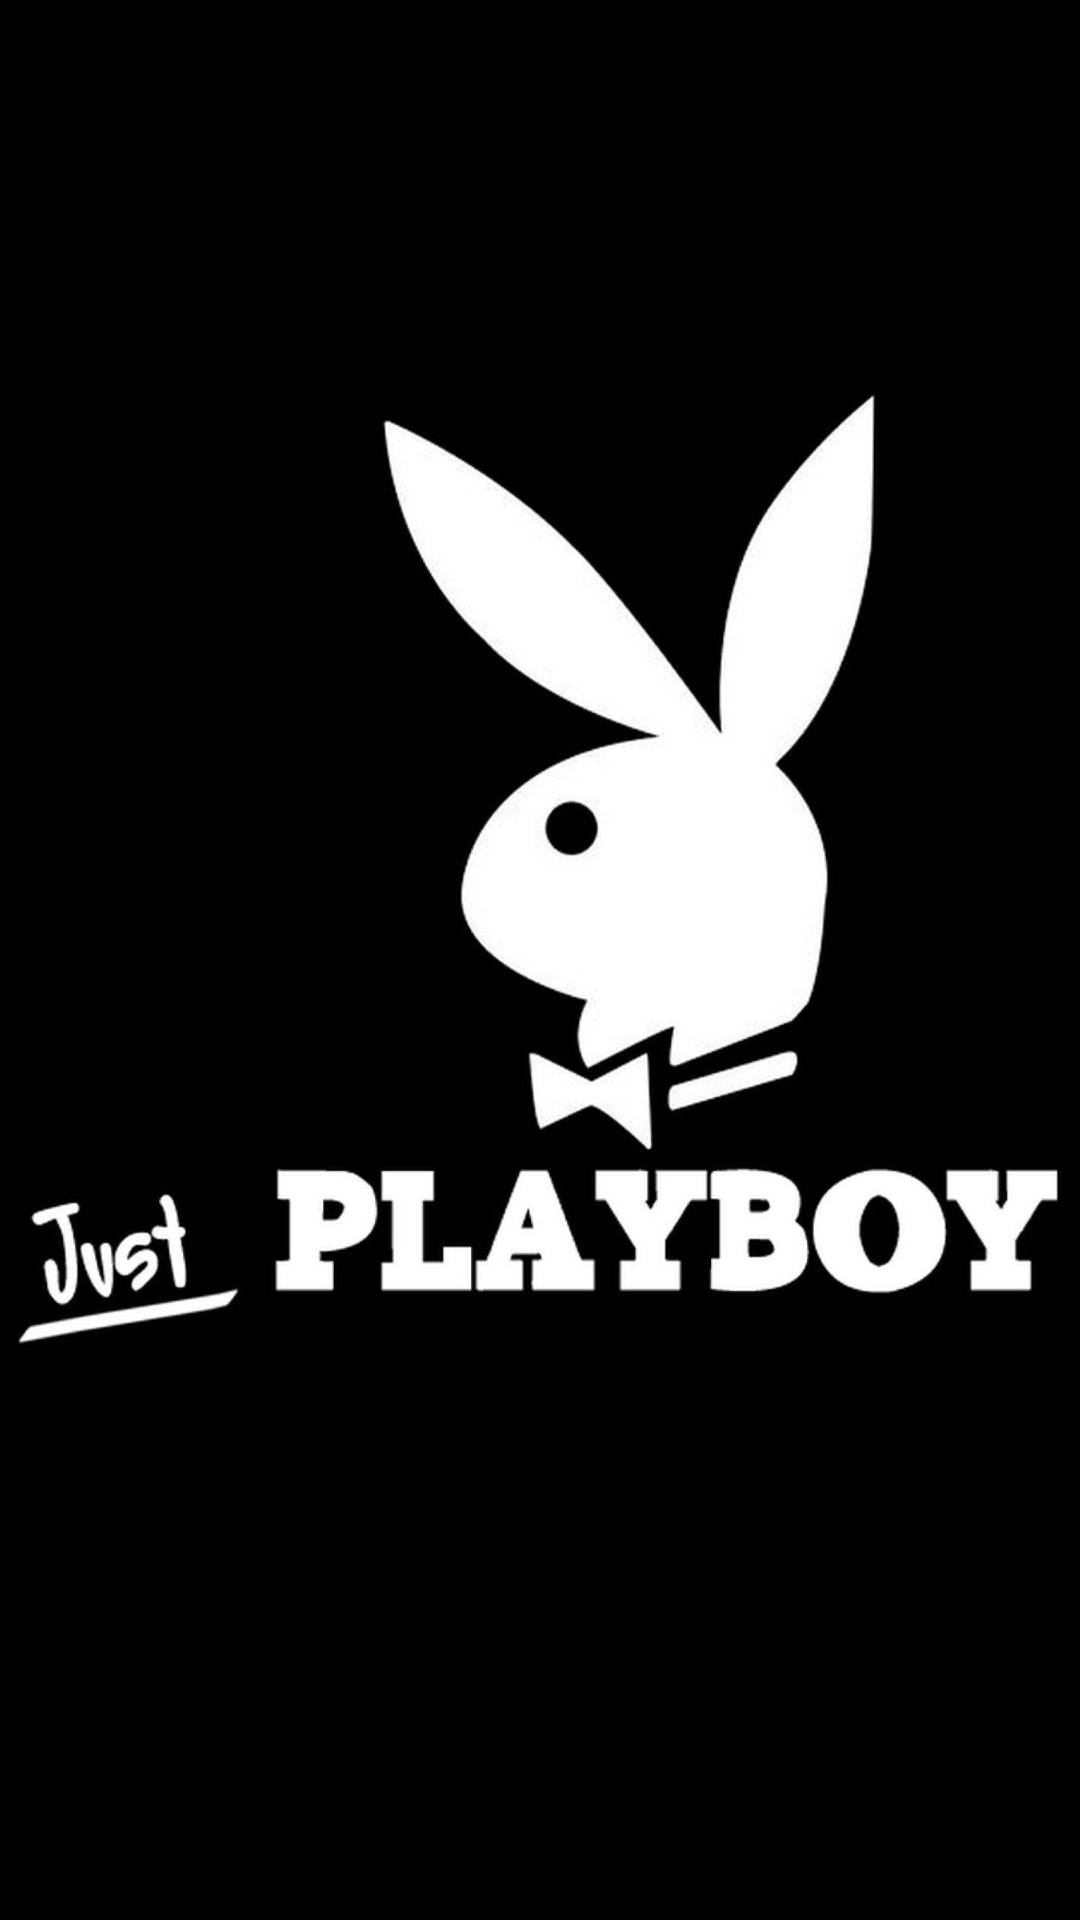 Just Playboy Logo Background